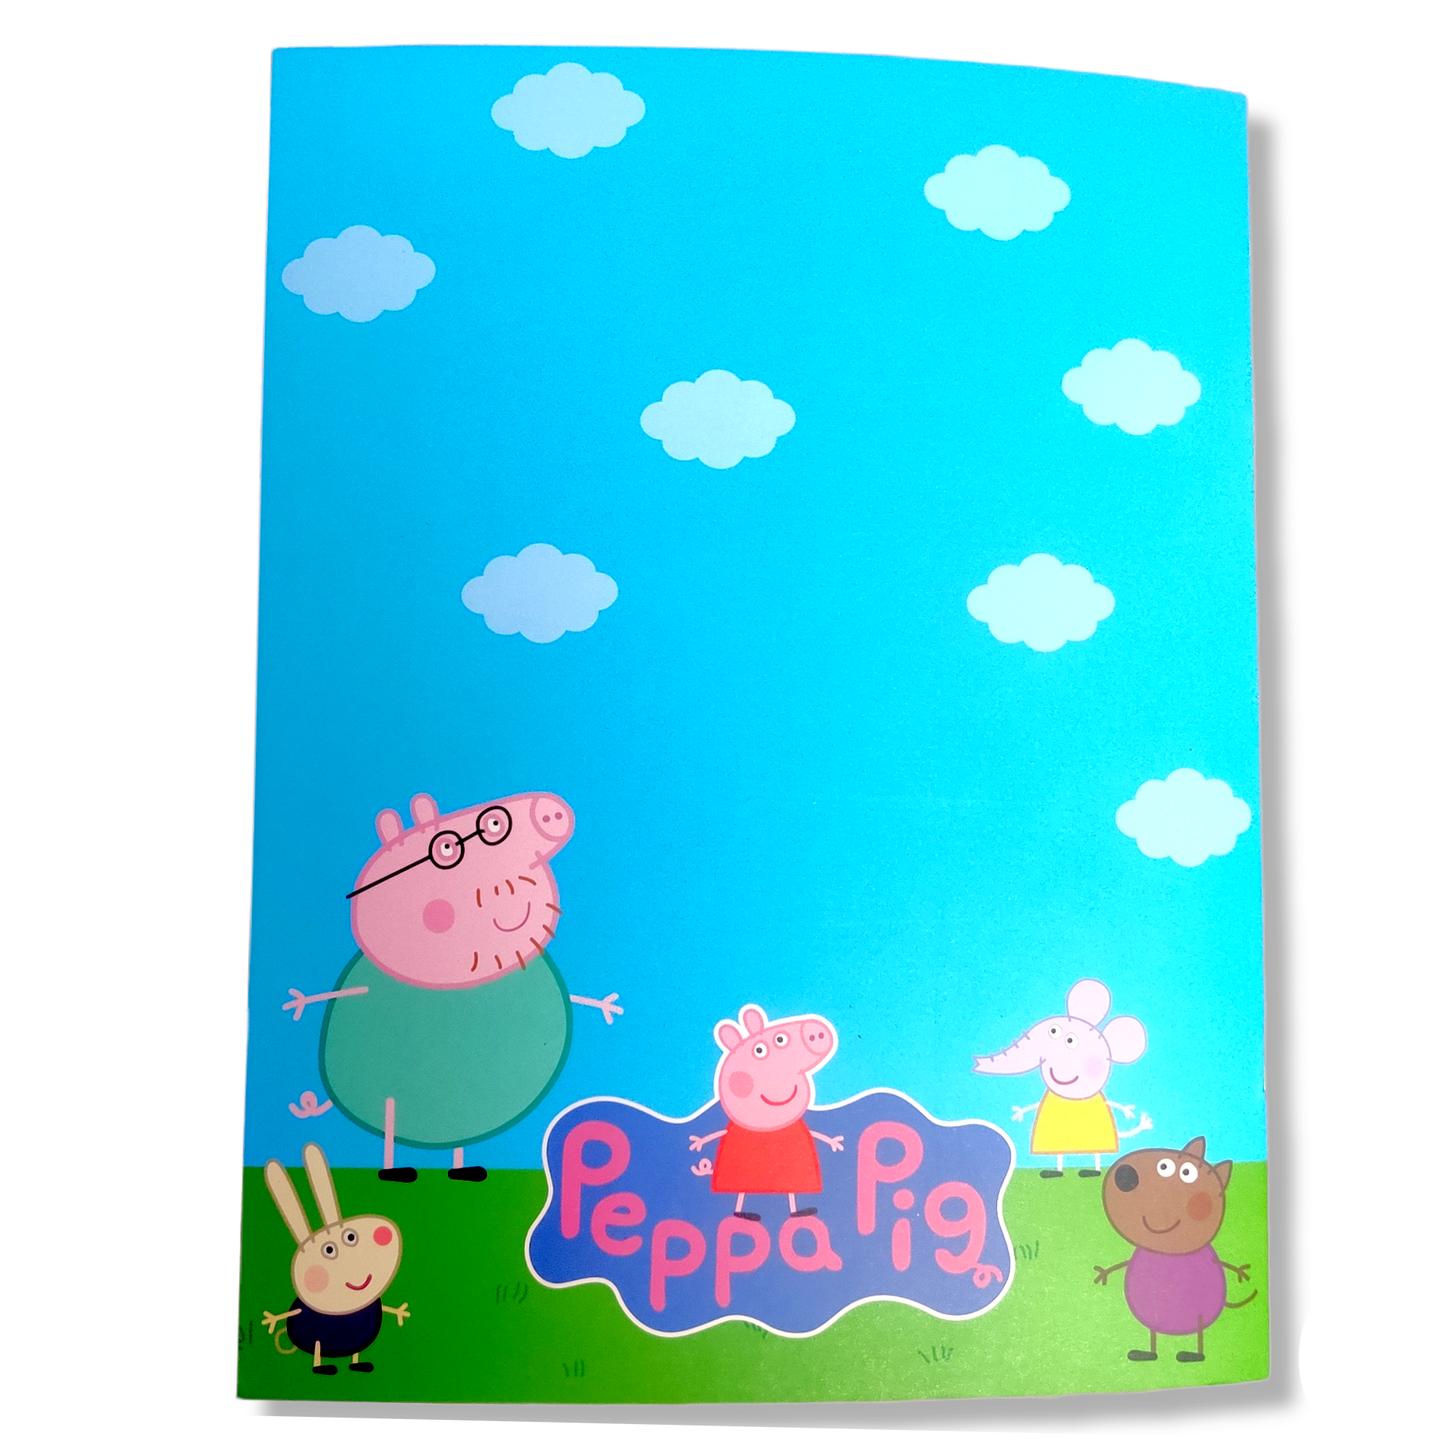 Peppa pig Colouring Book - The Umbrella store